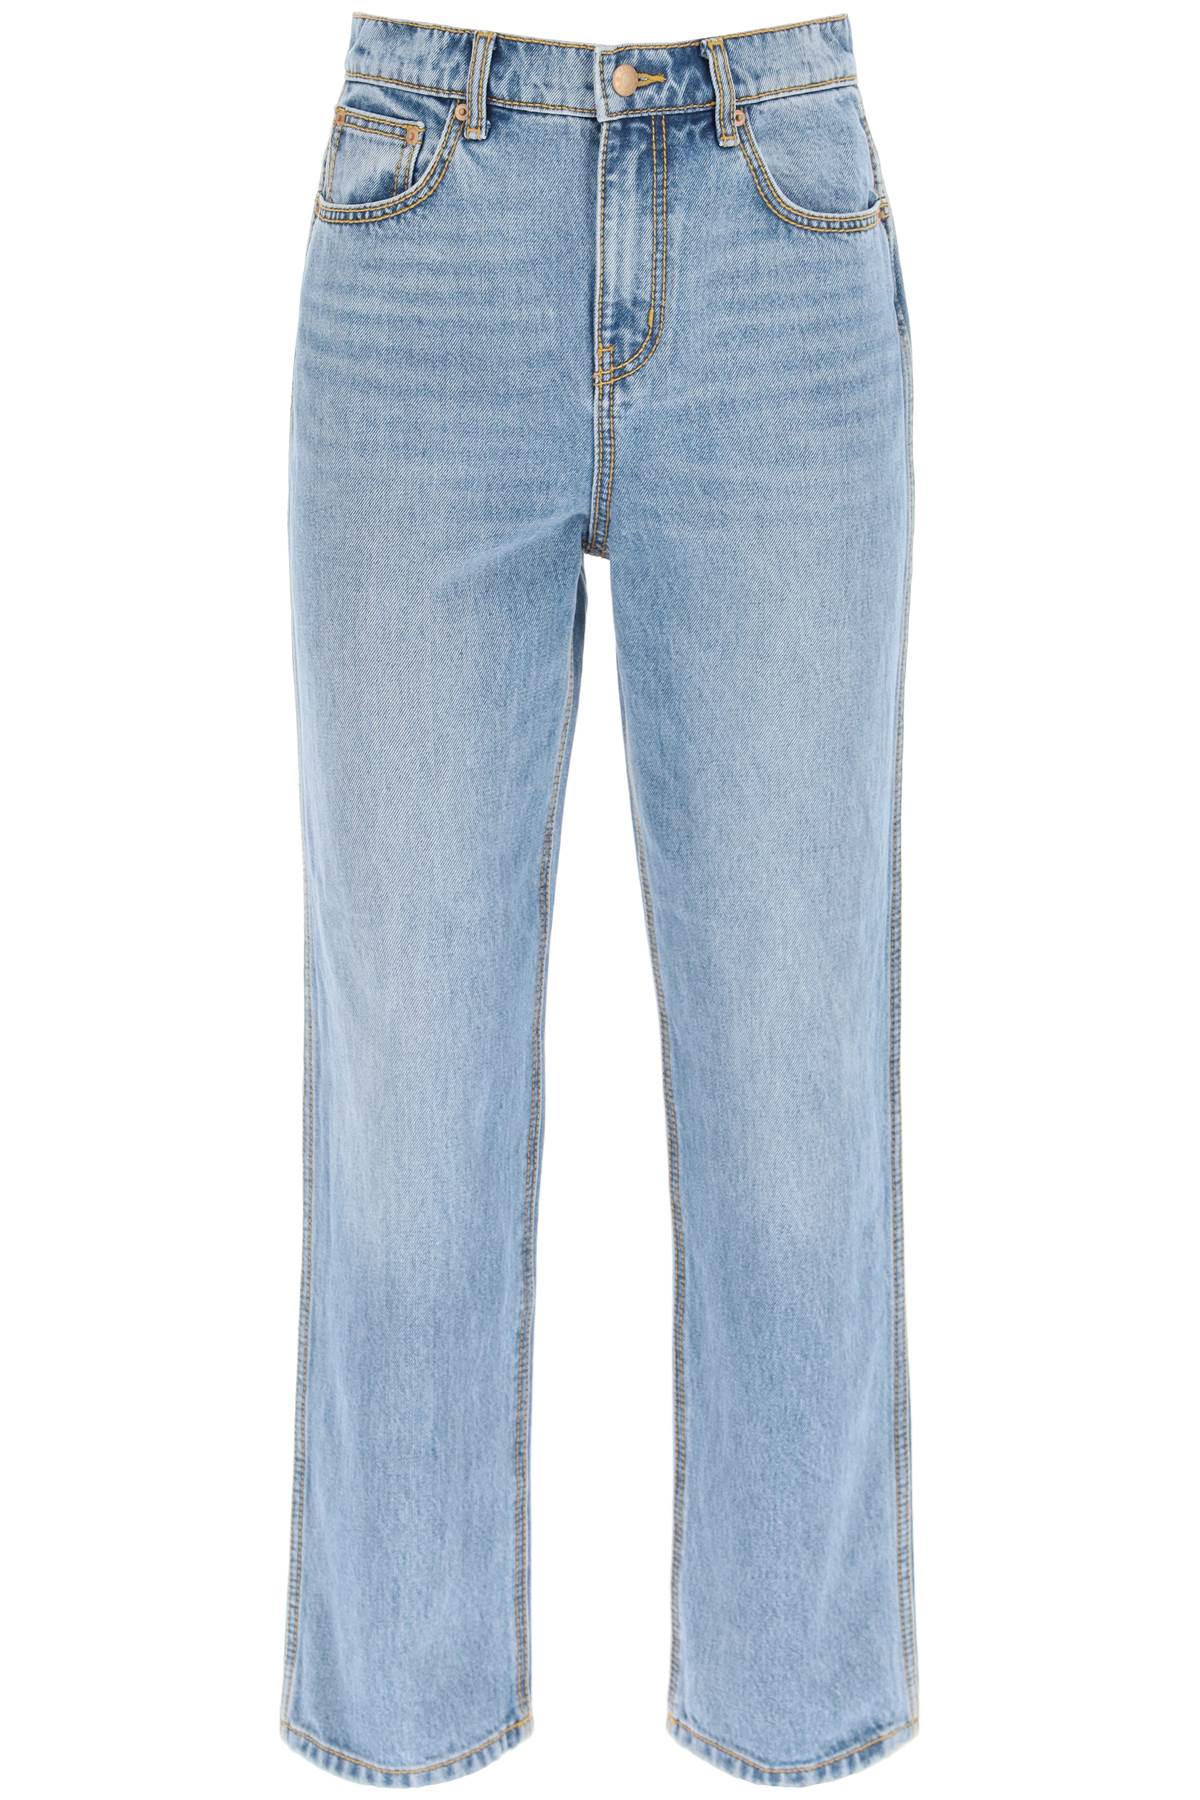 Tory Burch High-waisted Straight-cut Jeans